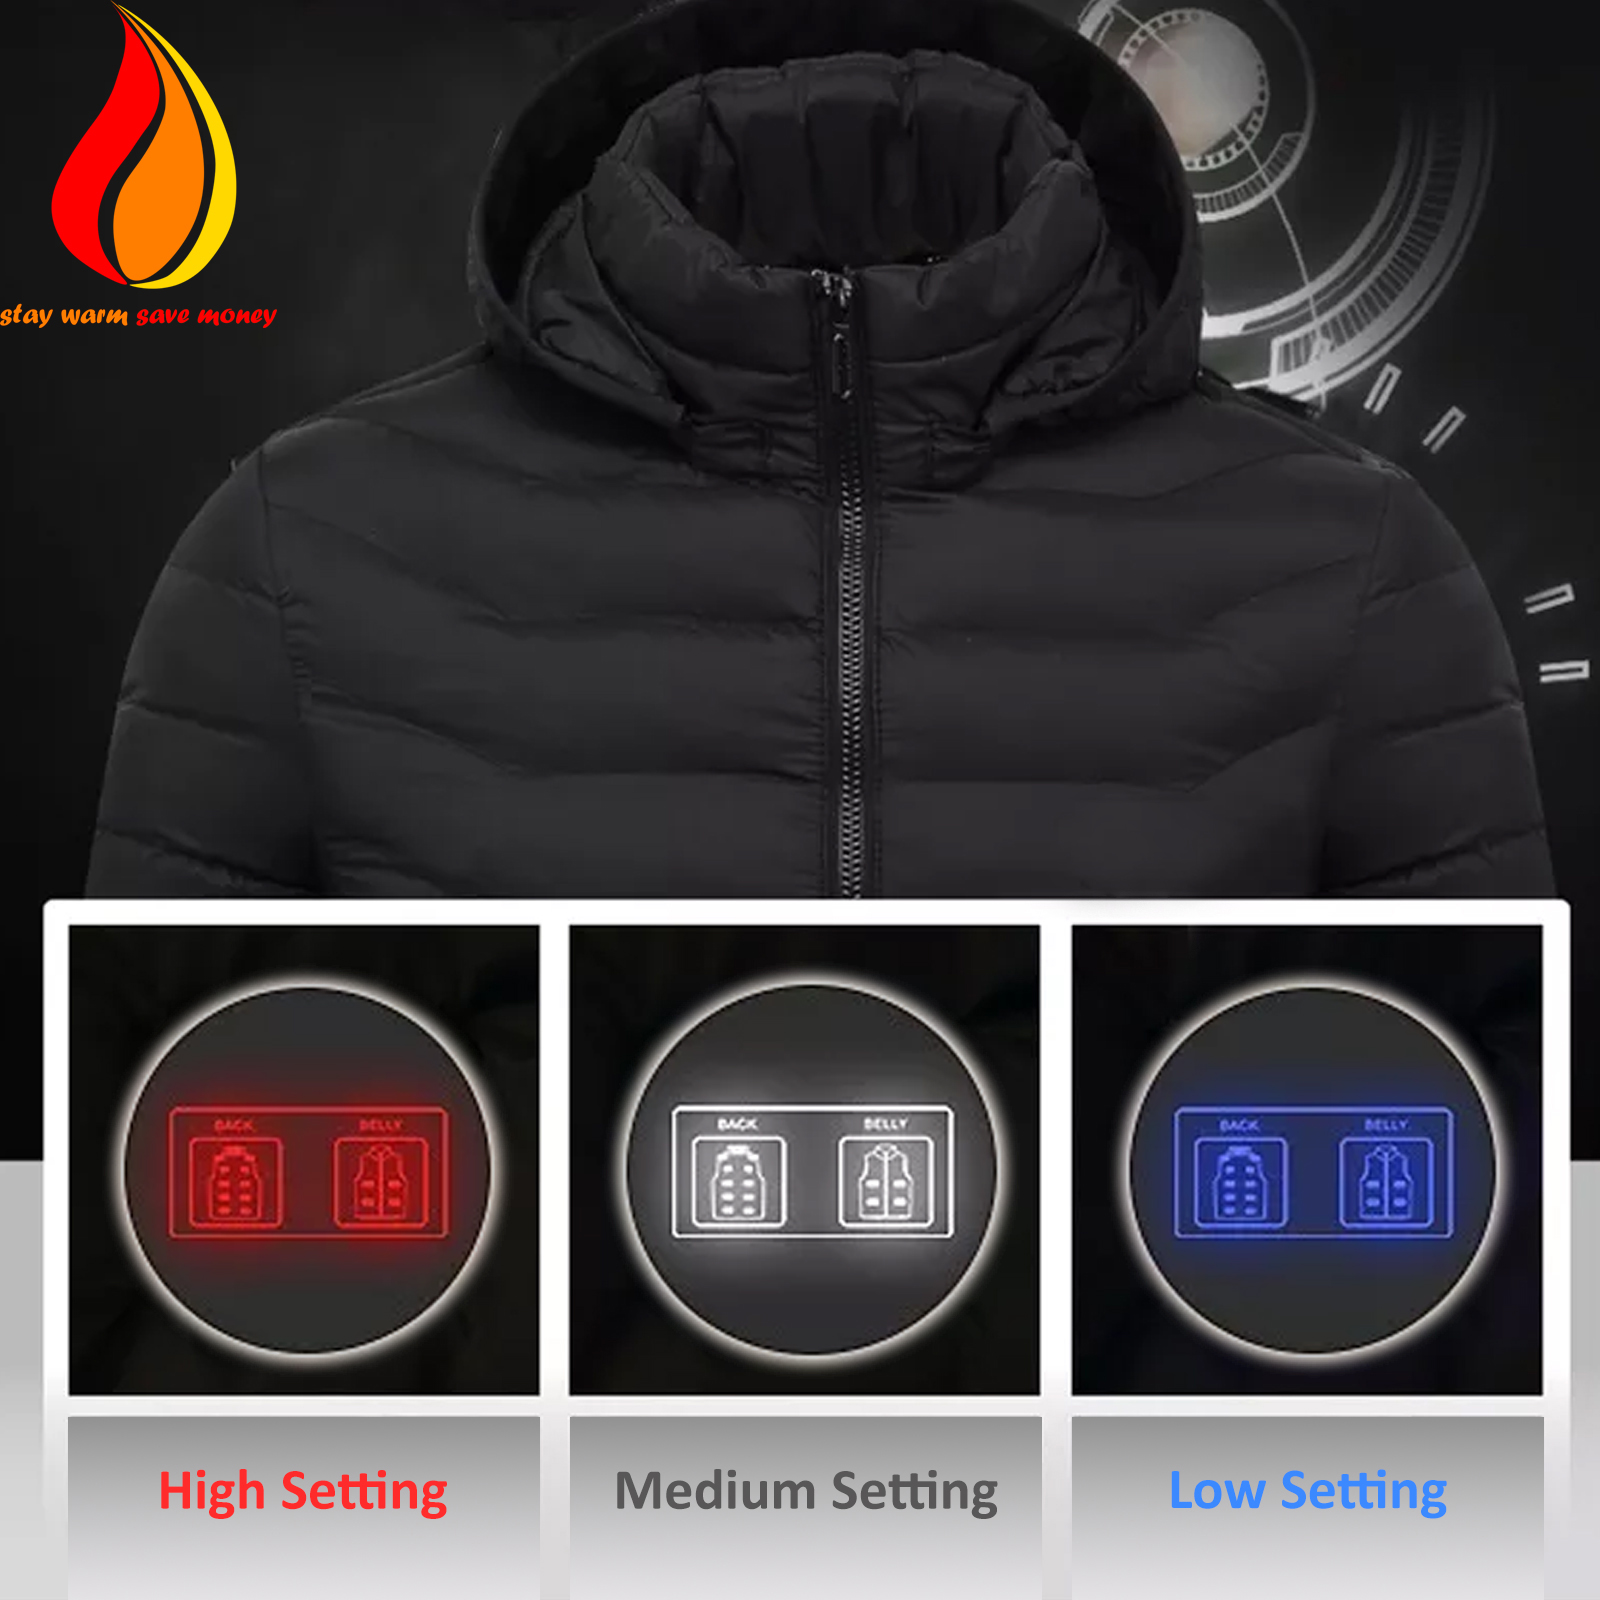 Heated Jacket (including Powerbank) - Stay Warm Save Money